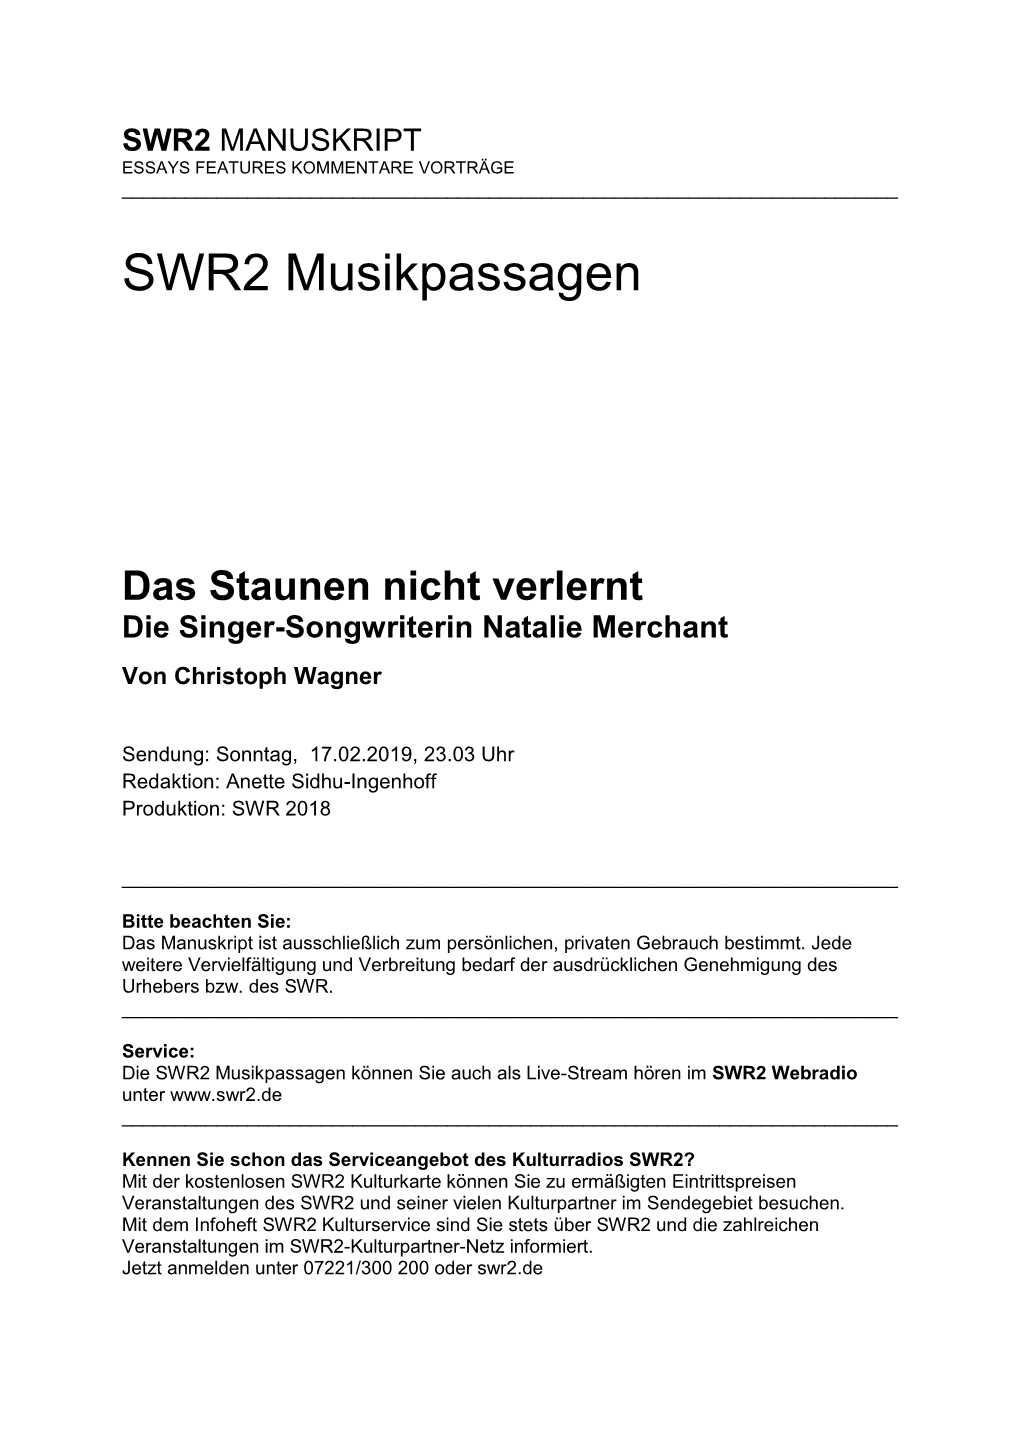 SWR2 Musikpassagen